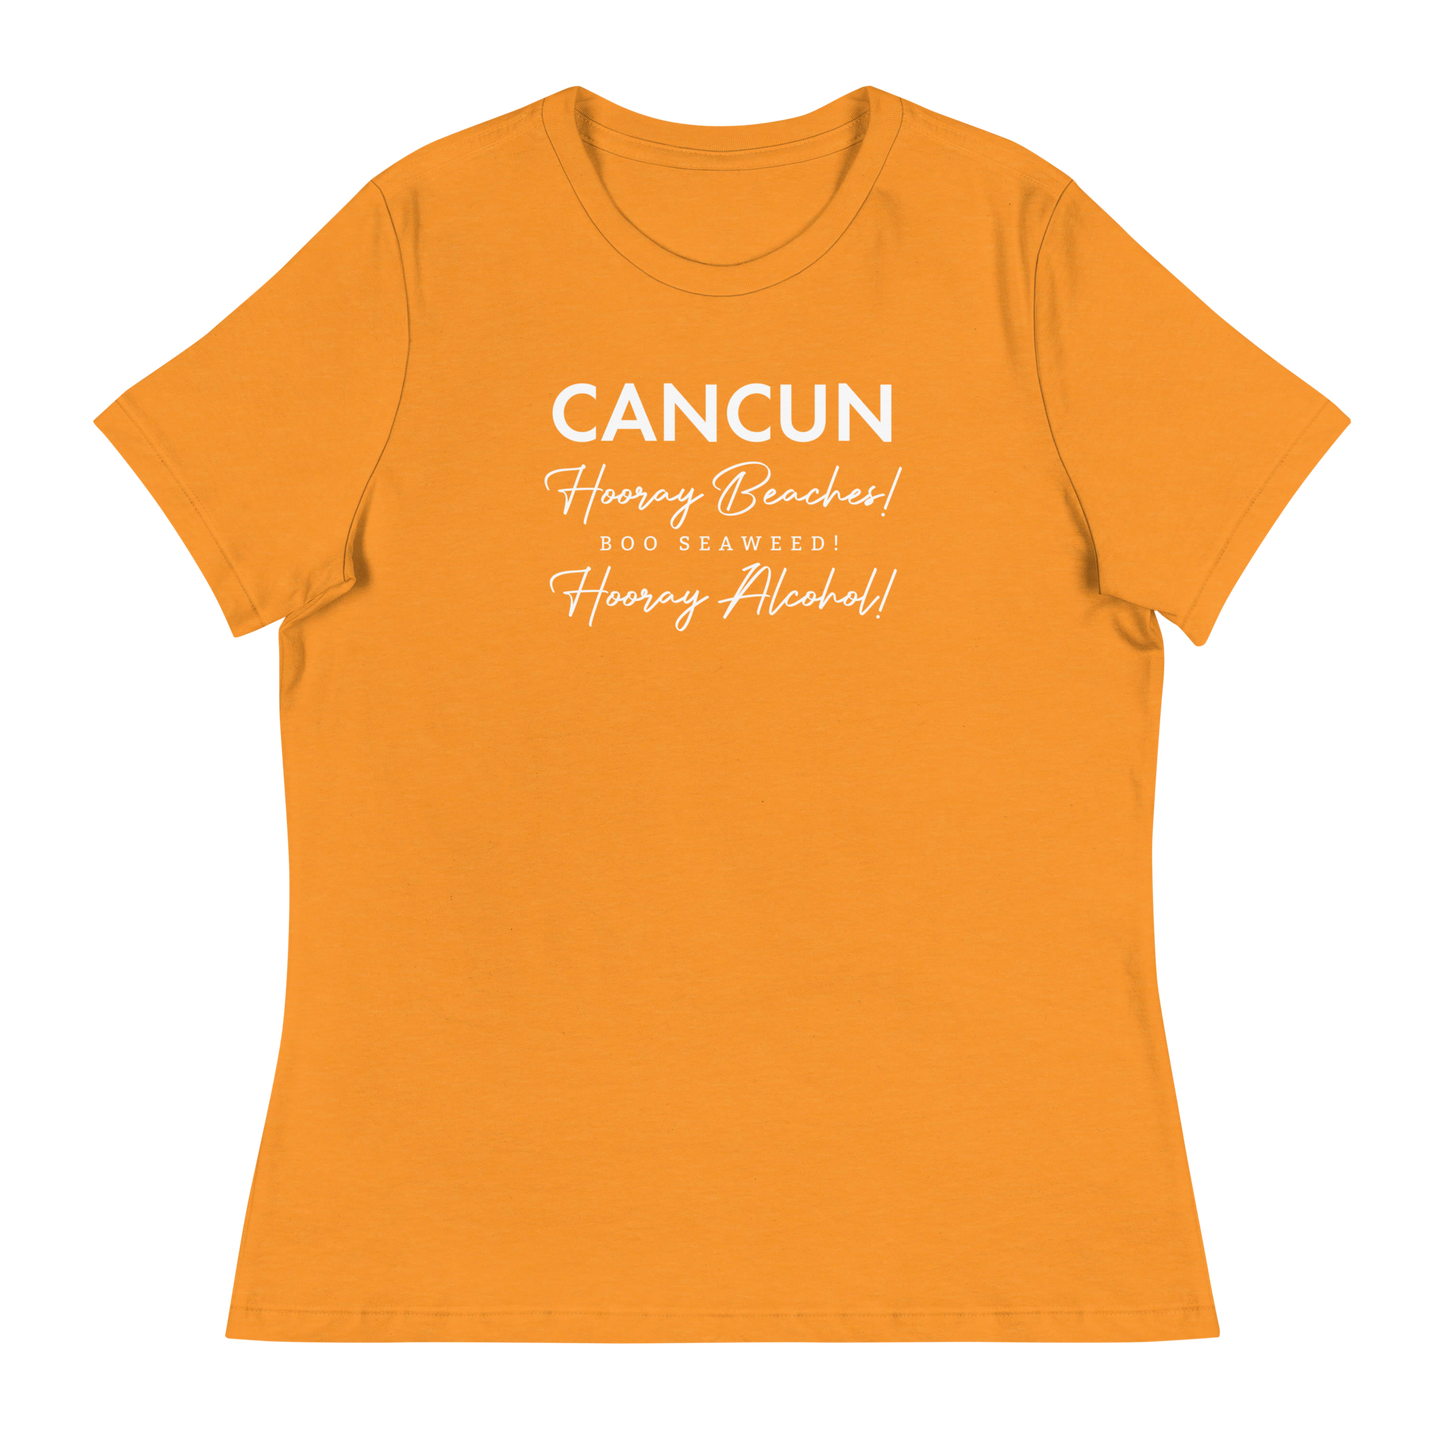 Women's - CANCUN - Hooray Beaches! BOO Seaweed! Hooray Alcohol! - Funny T-Shirt